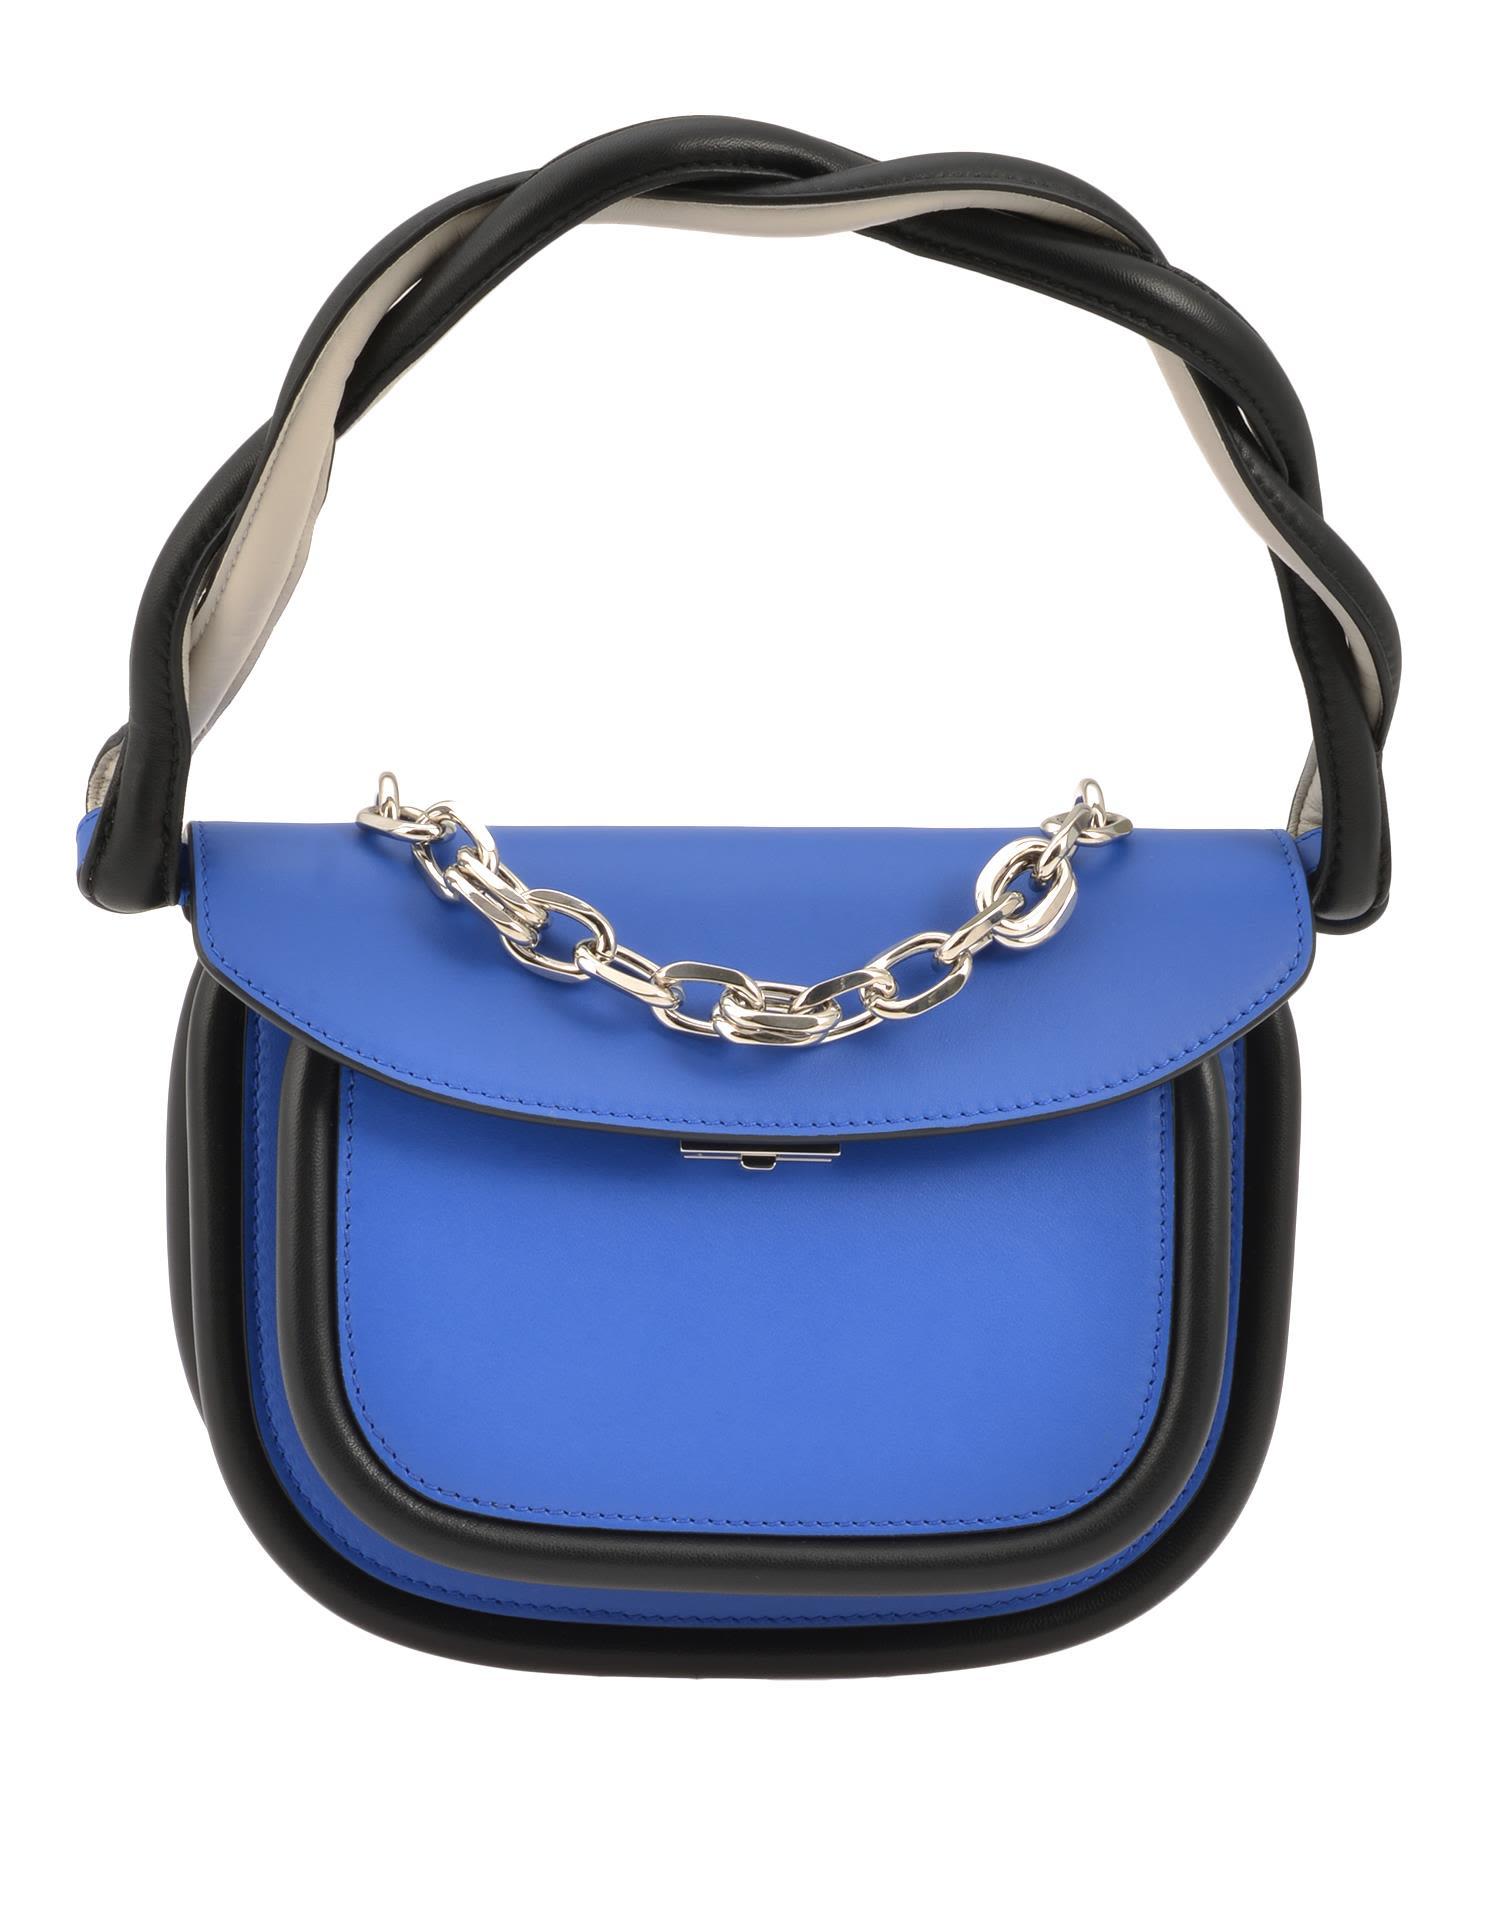 Marni Titan Leather Shoulder Bag In Royal Blue/silver | ModeSens